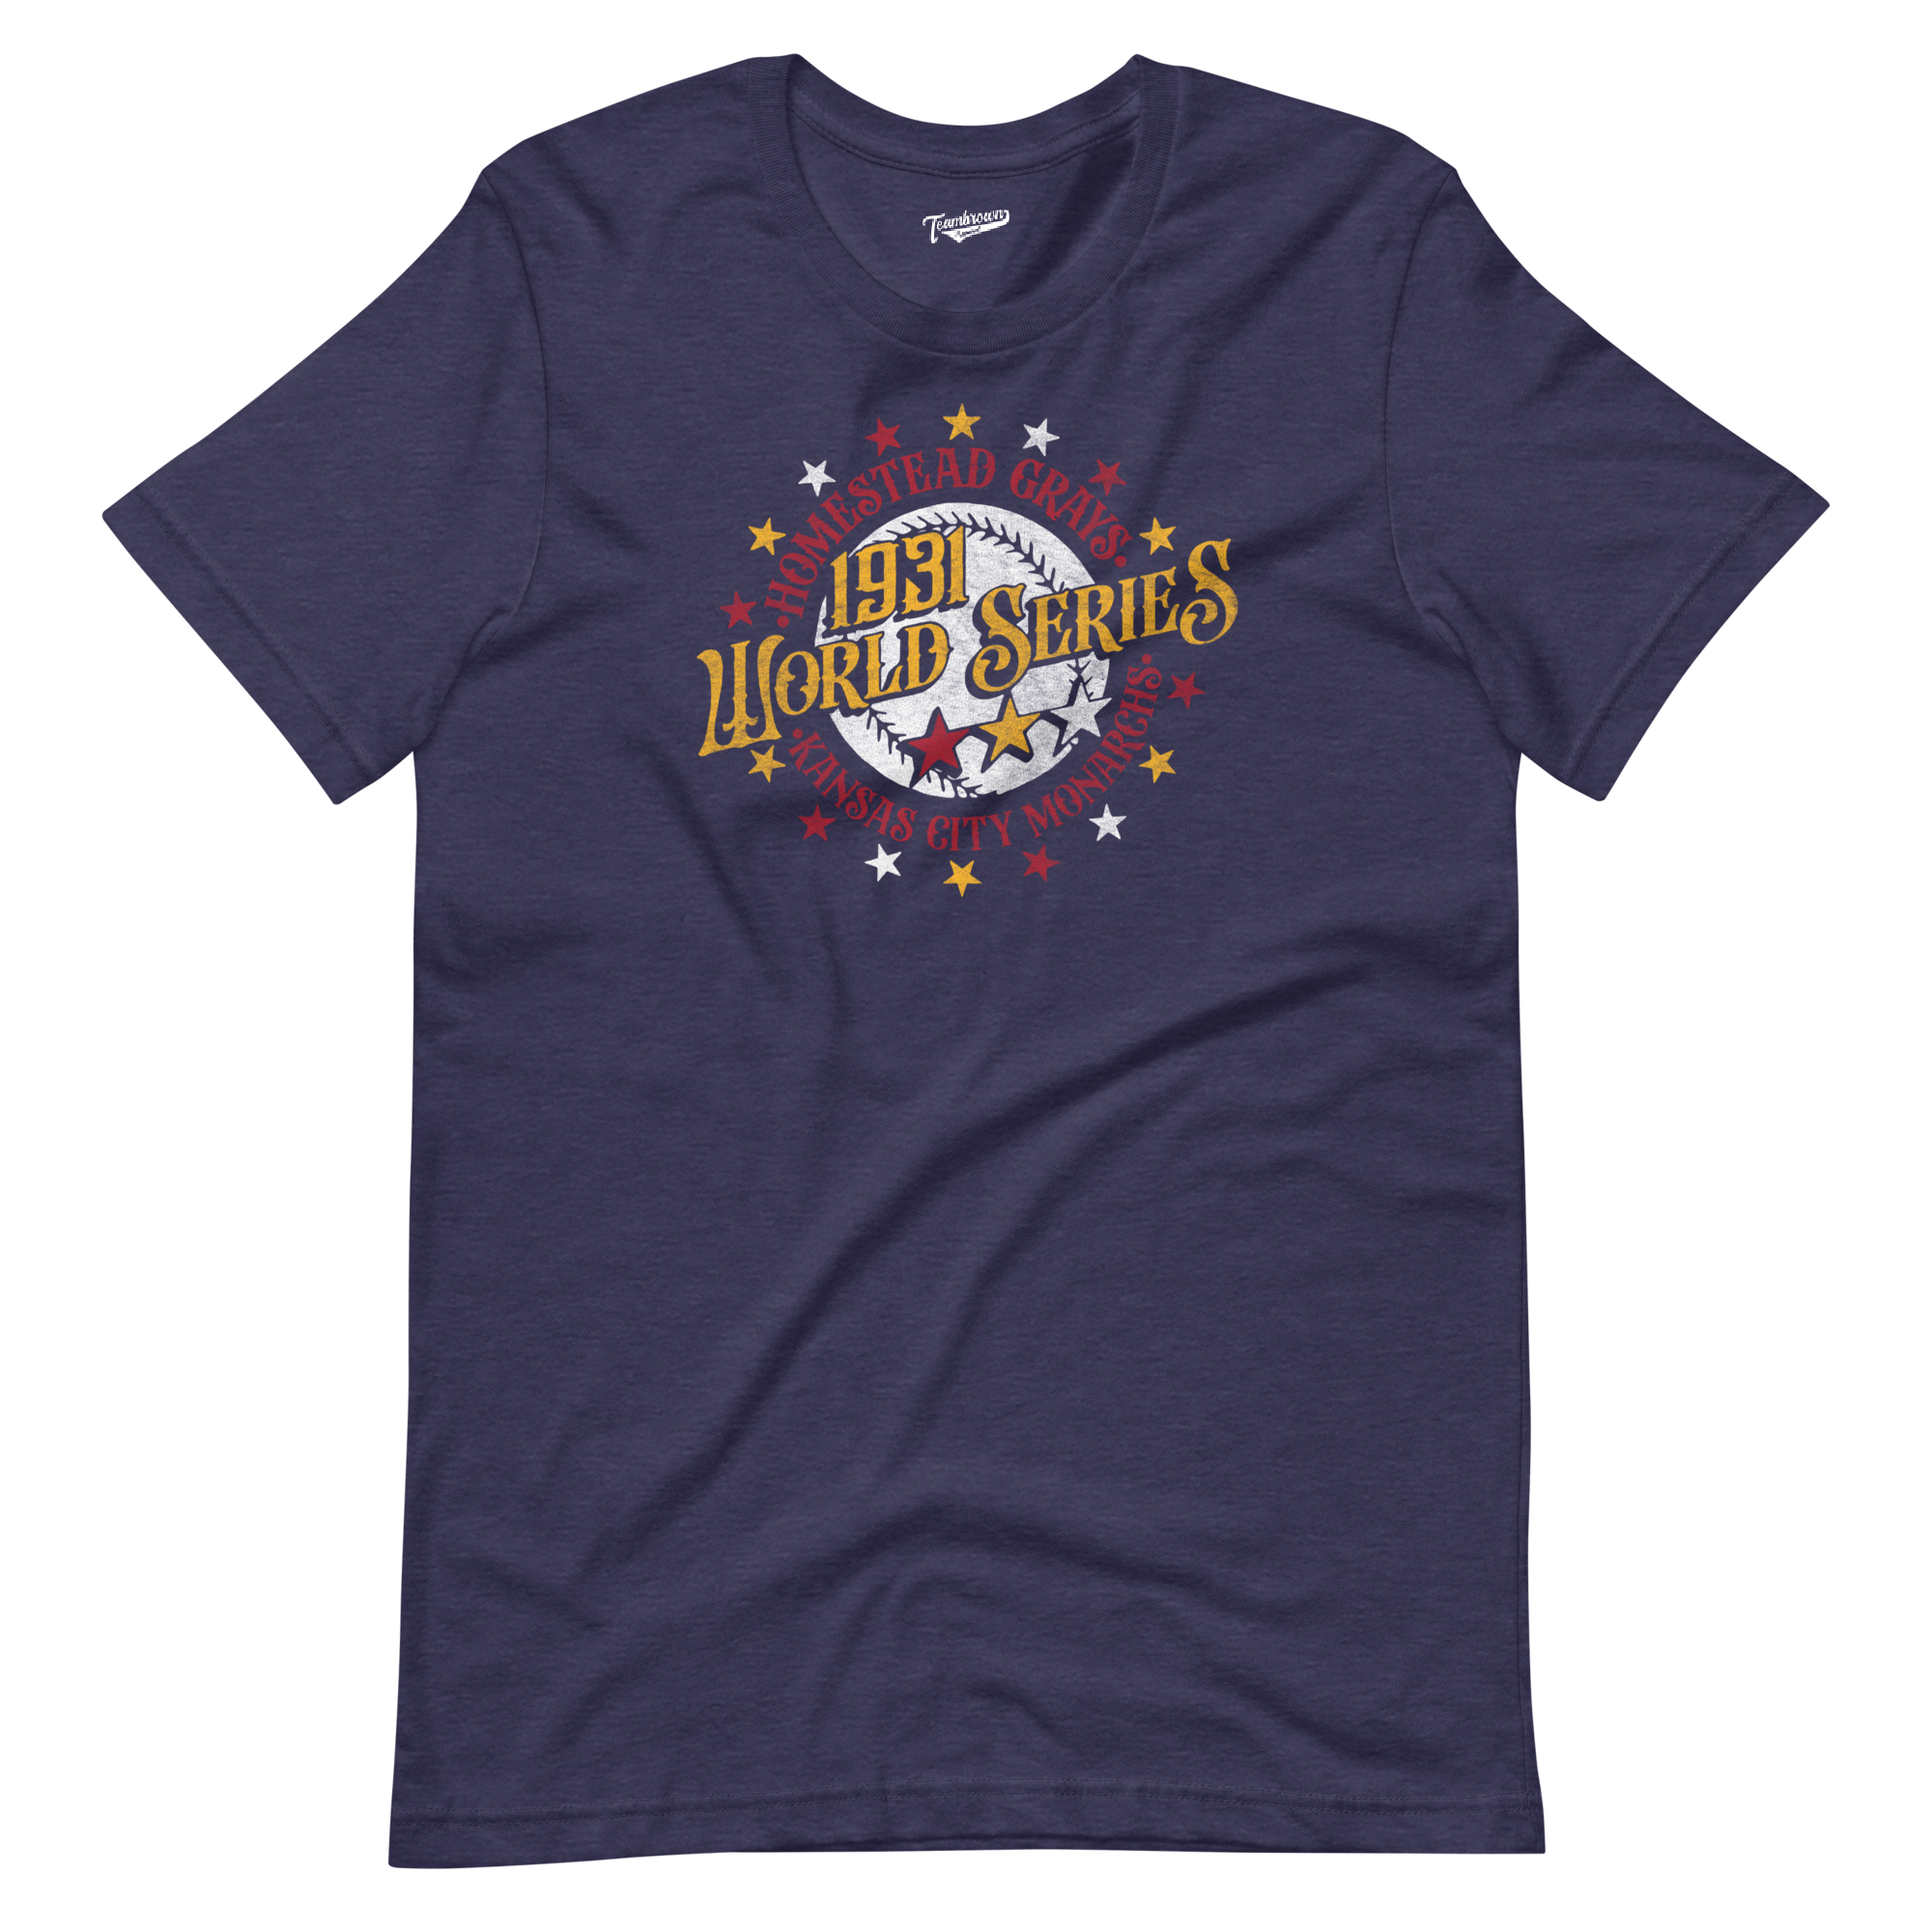 1931 World Series Homestead vs. Kansas City - Unisex T-Shirt